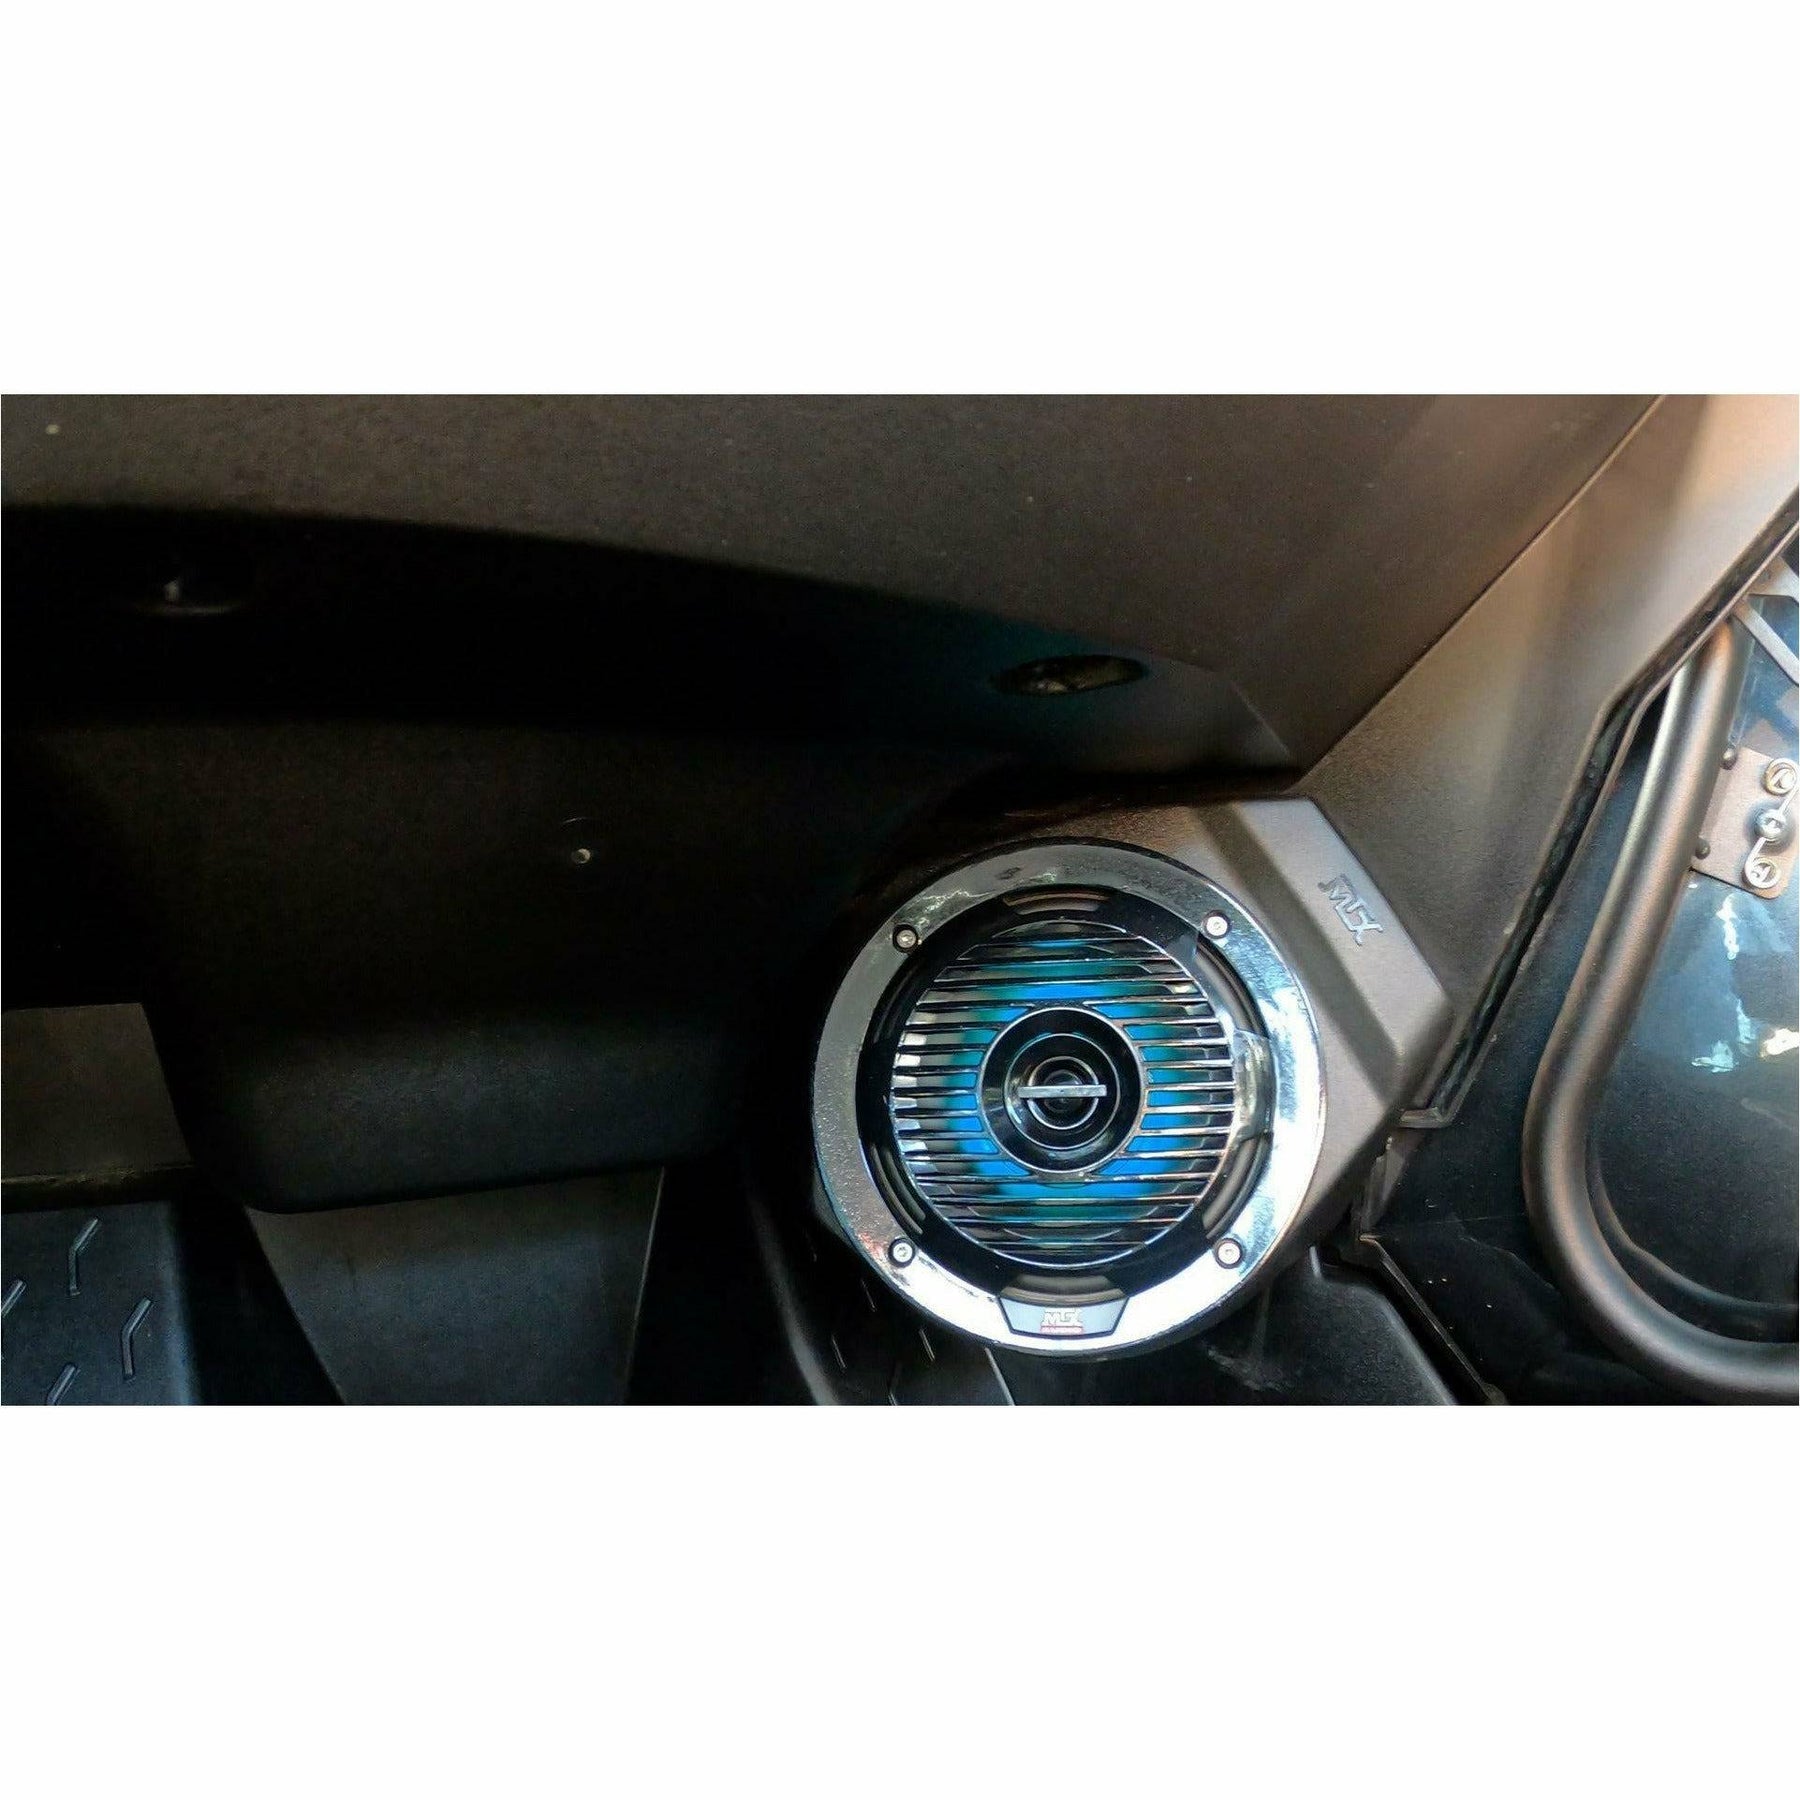 MTX Audio Can Am Maverick X3 Front Lower Speaker Pods